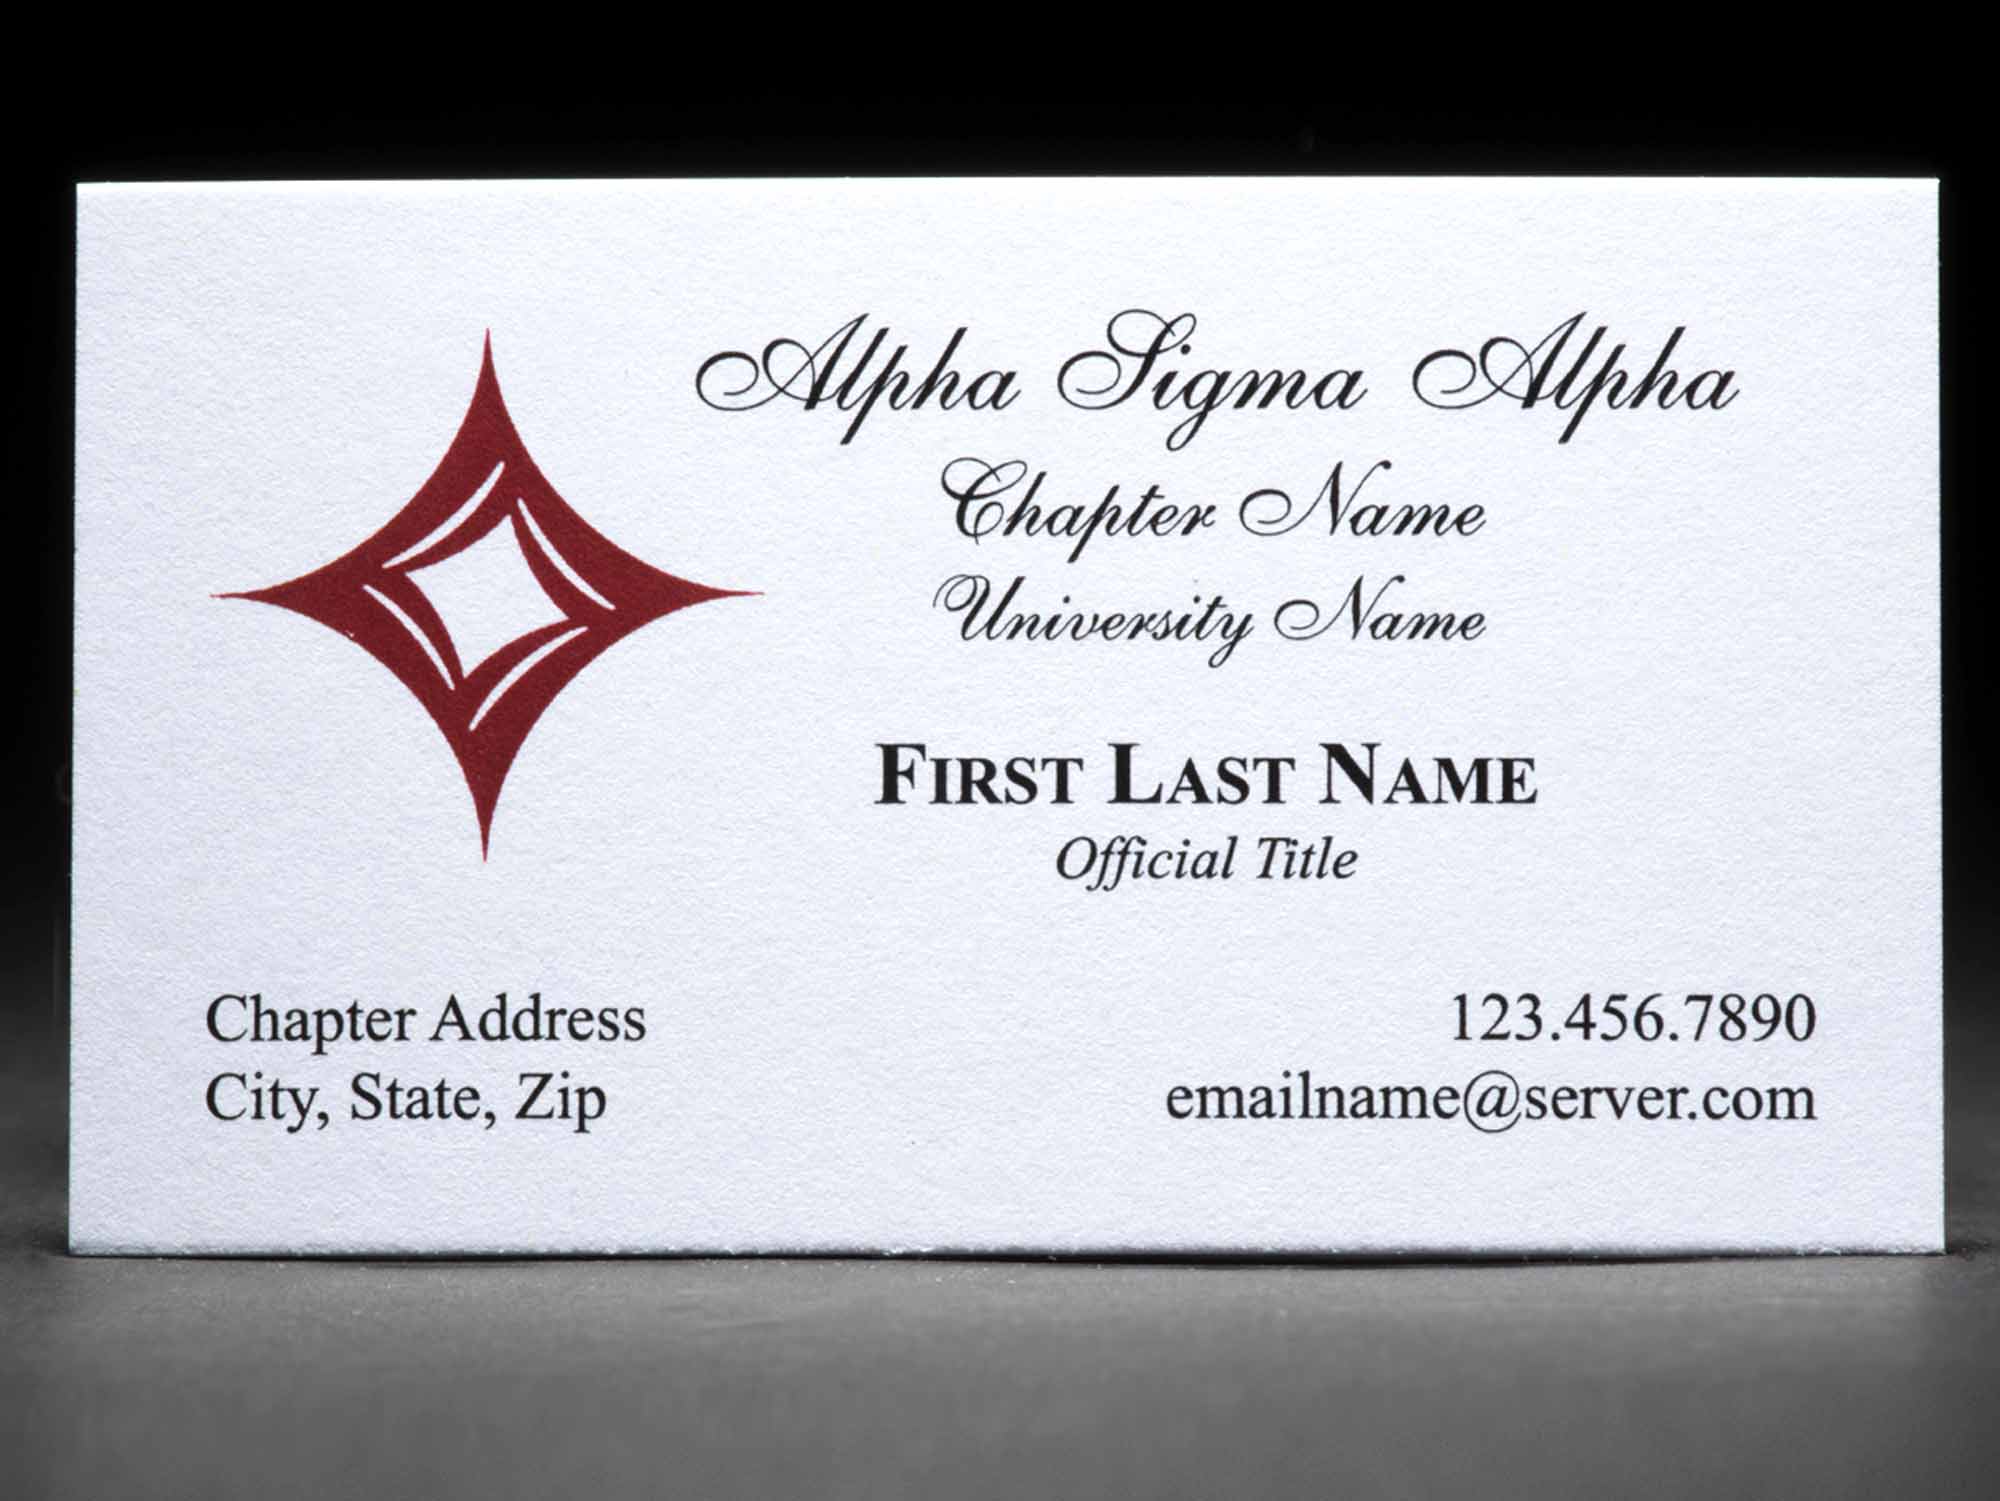 Business Cards Alpha Sigma Alpha